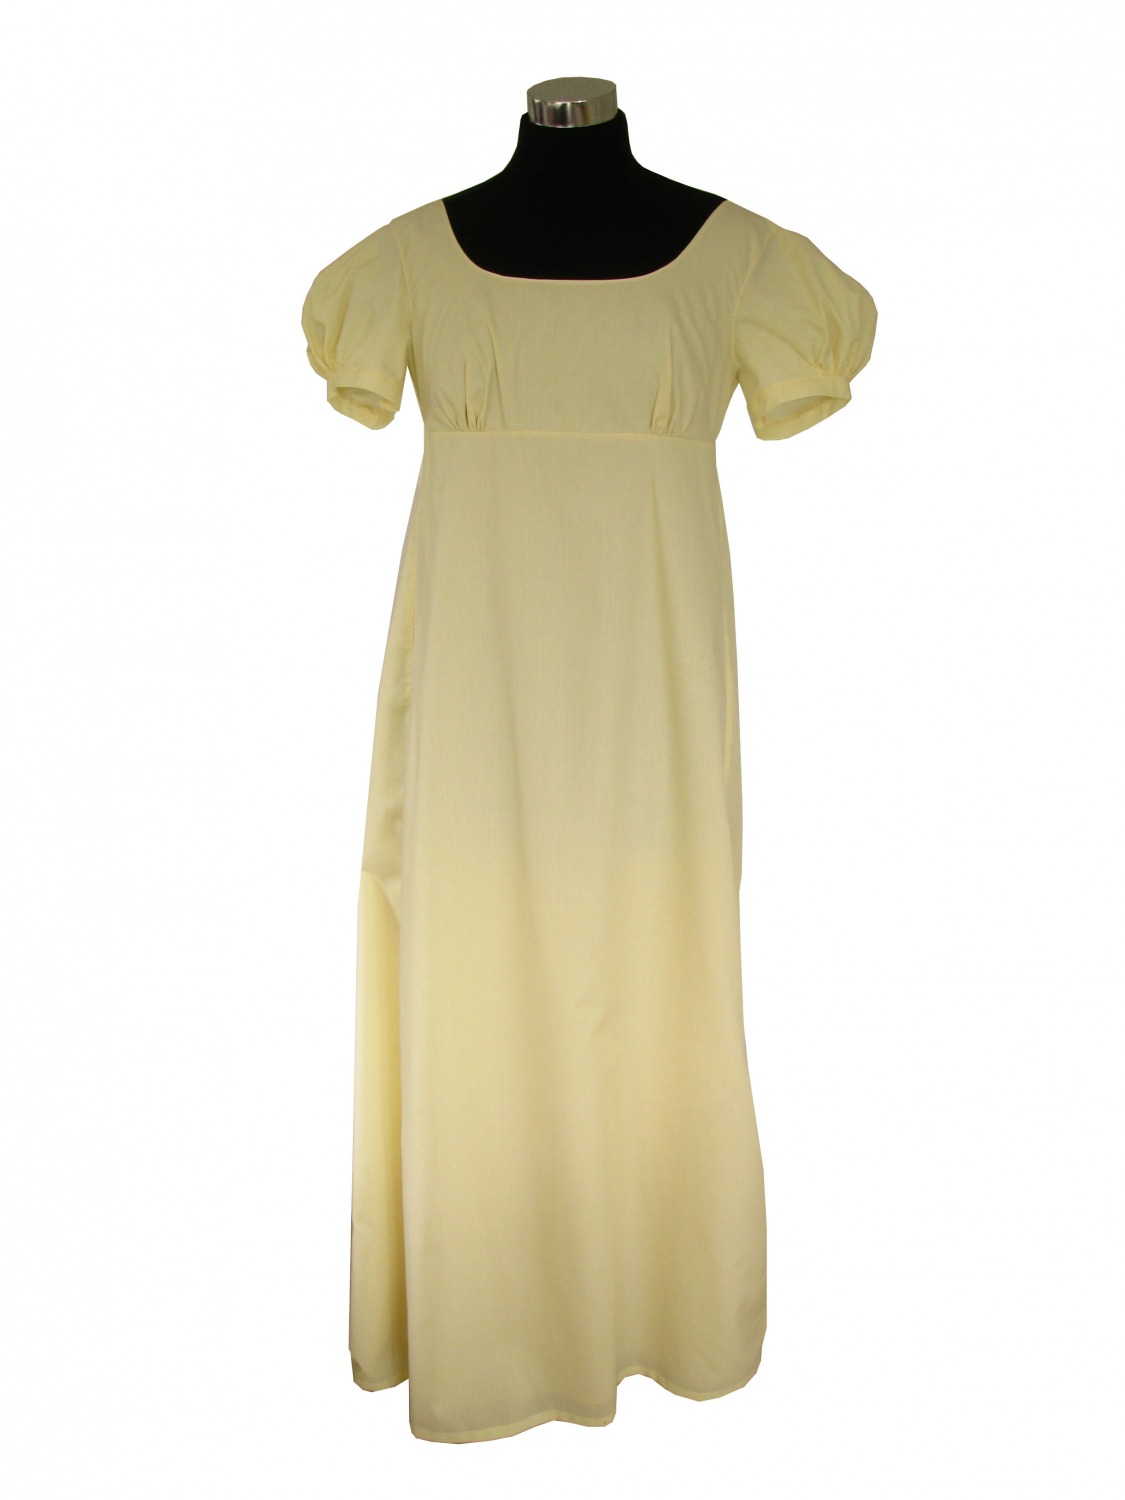 Ladies 18th 19th Century Regency Jane Austen Costume Size 8 - 10 Image